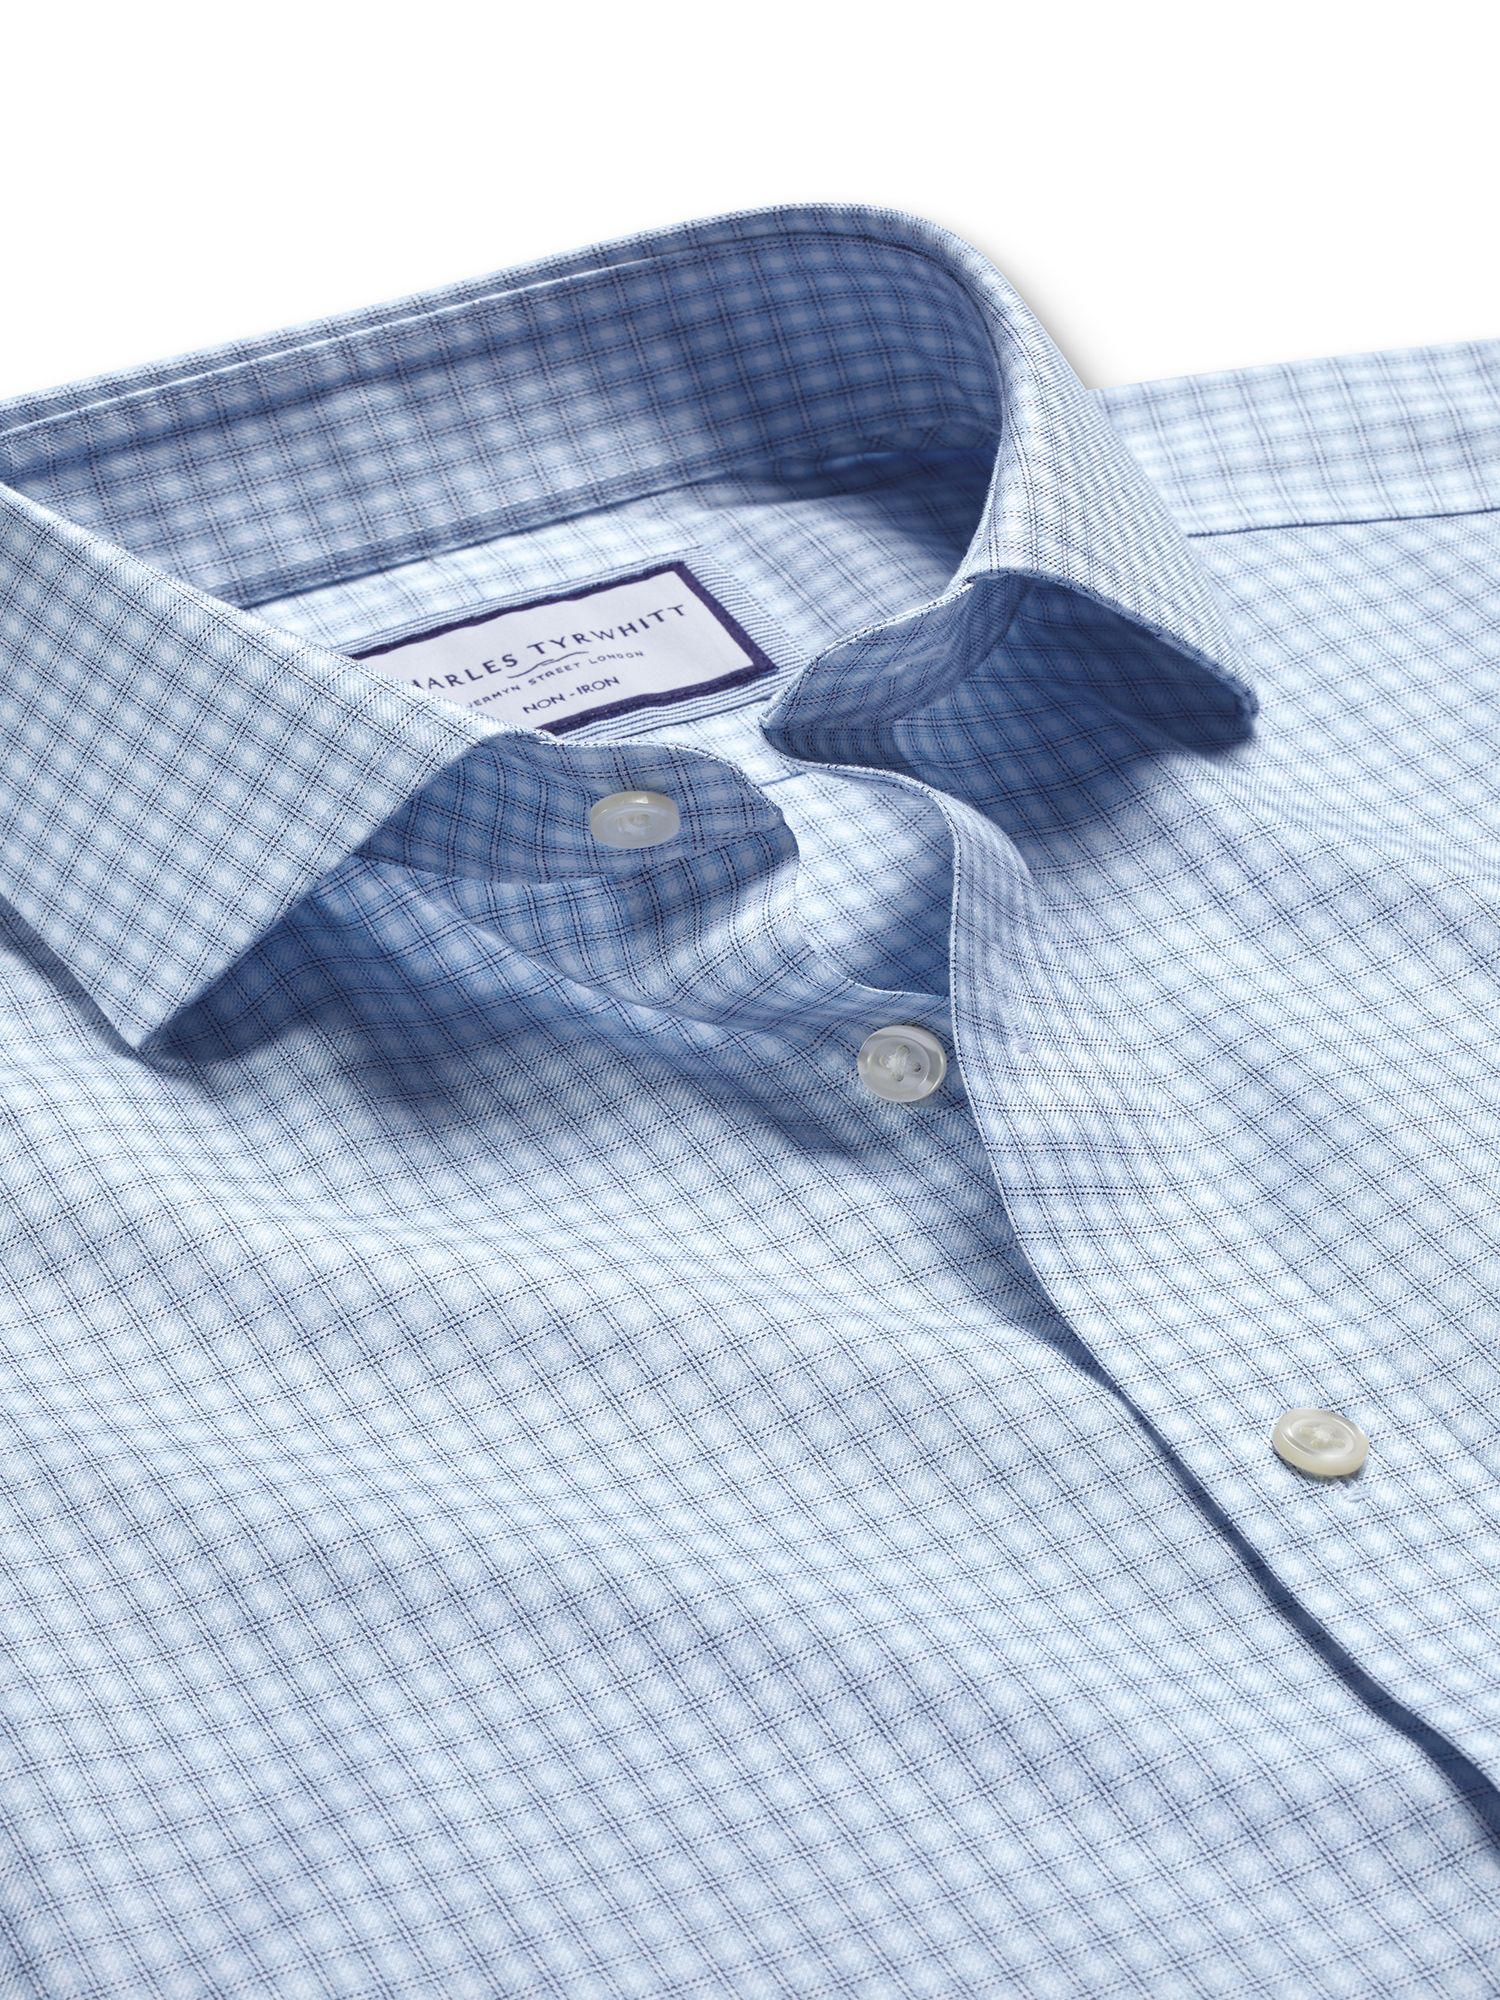 Charles Tyrwhitt Double Check Non-Iron Cutaway Slim Fit Shirt, Sky Blue ...